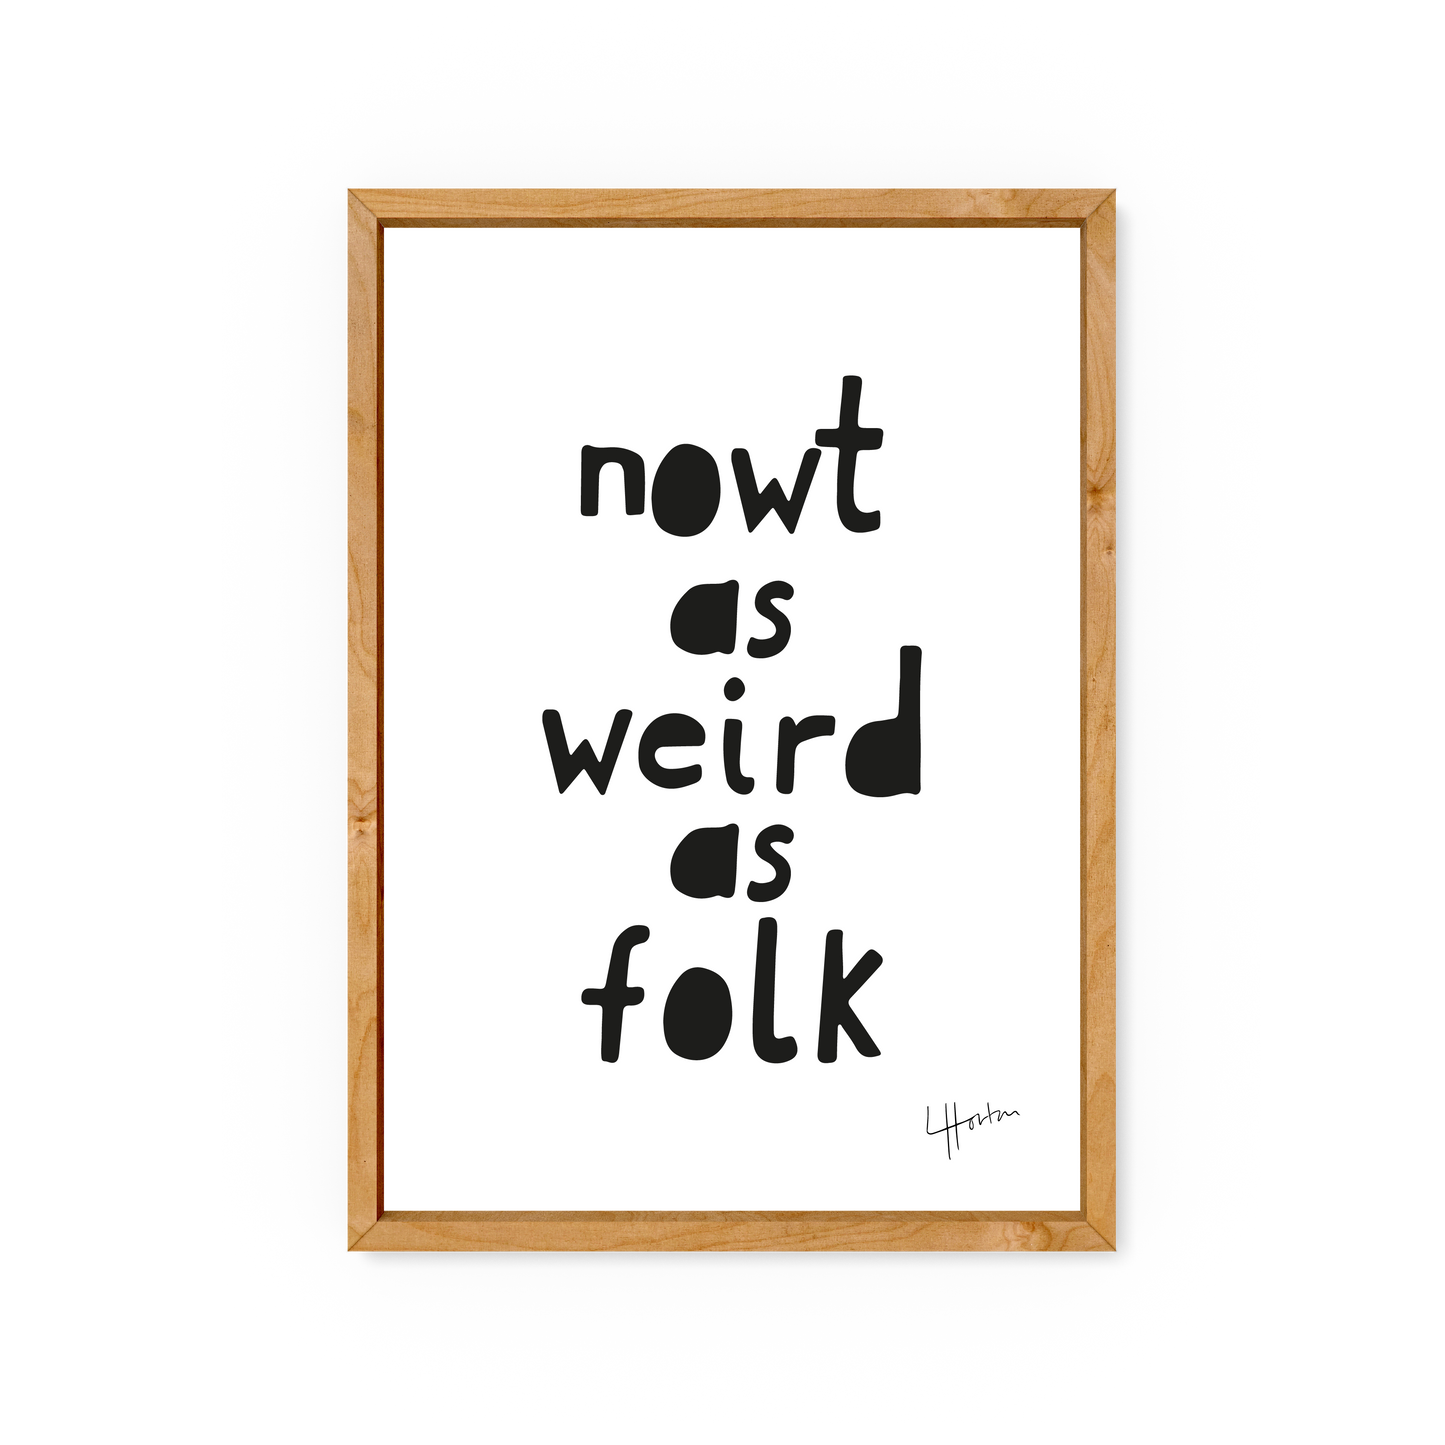 Nowt As Weird As Folk - Yorkshire Slang Art Print - Luke Horton